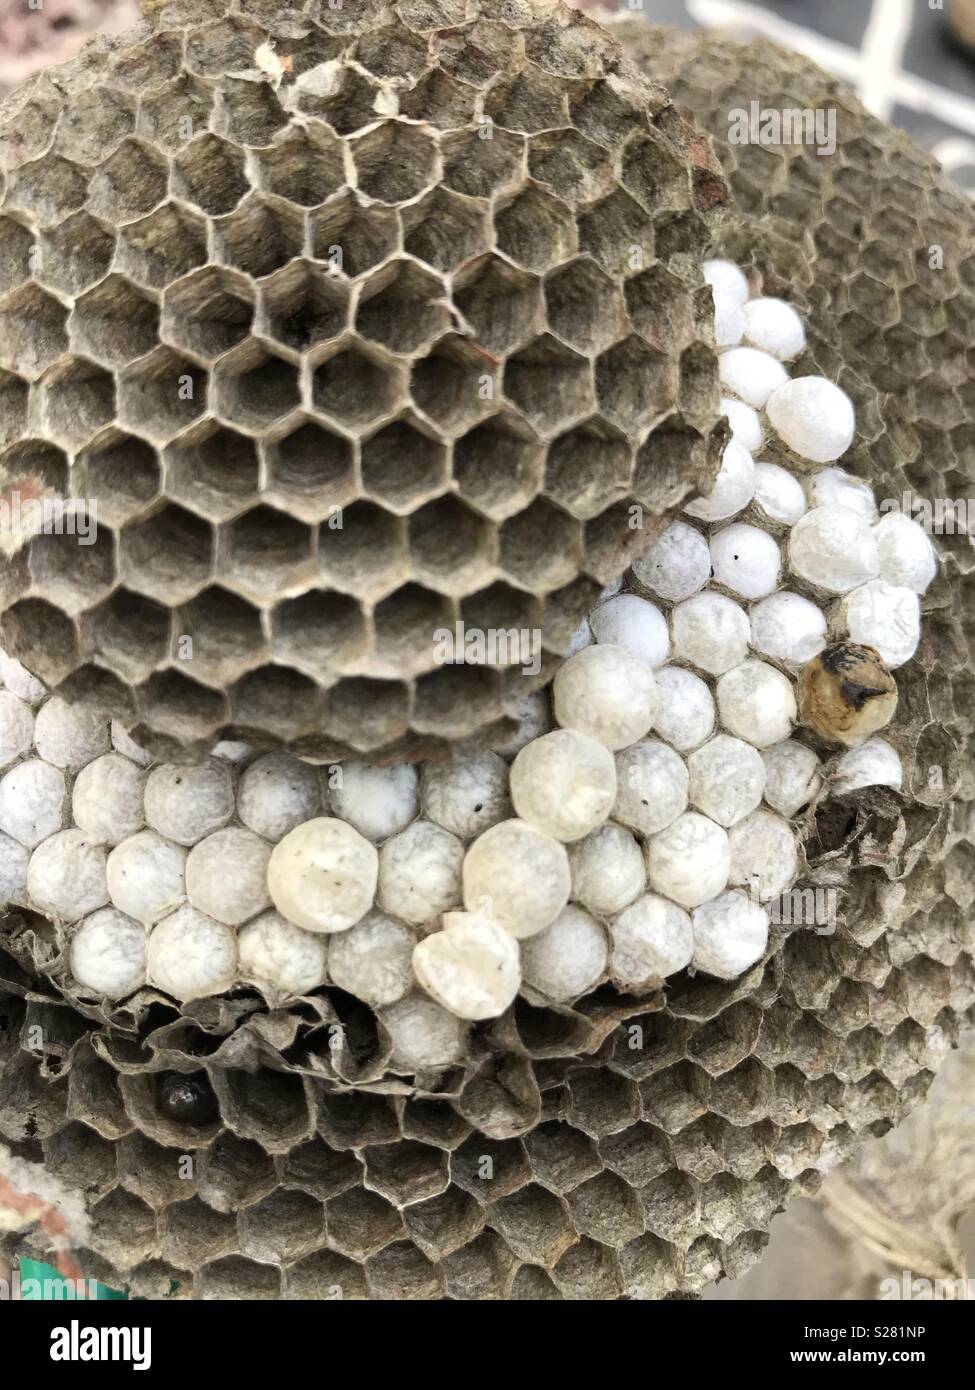 Wasps nest and honeycomb Stock Photo